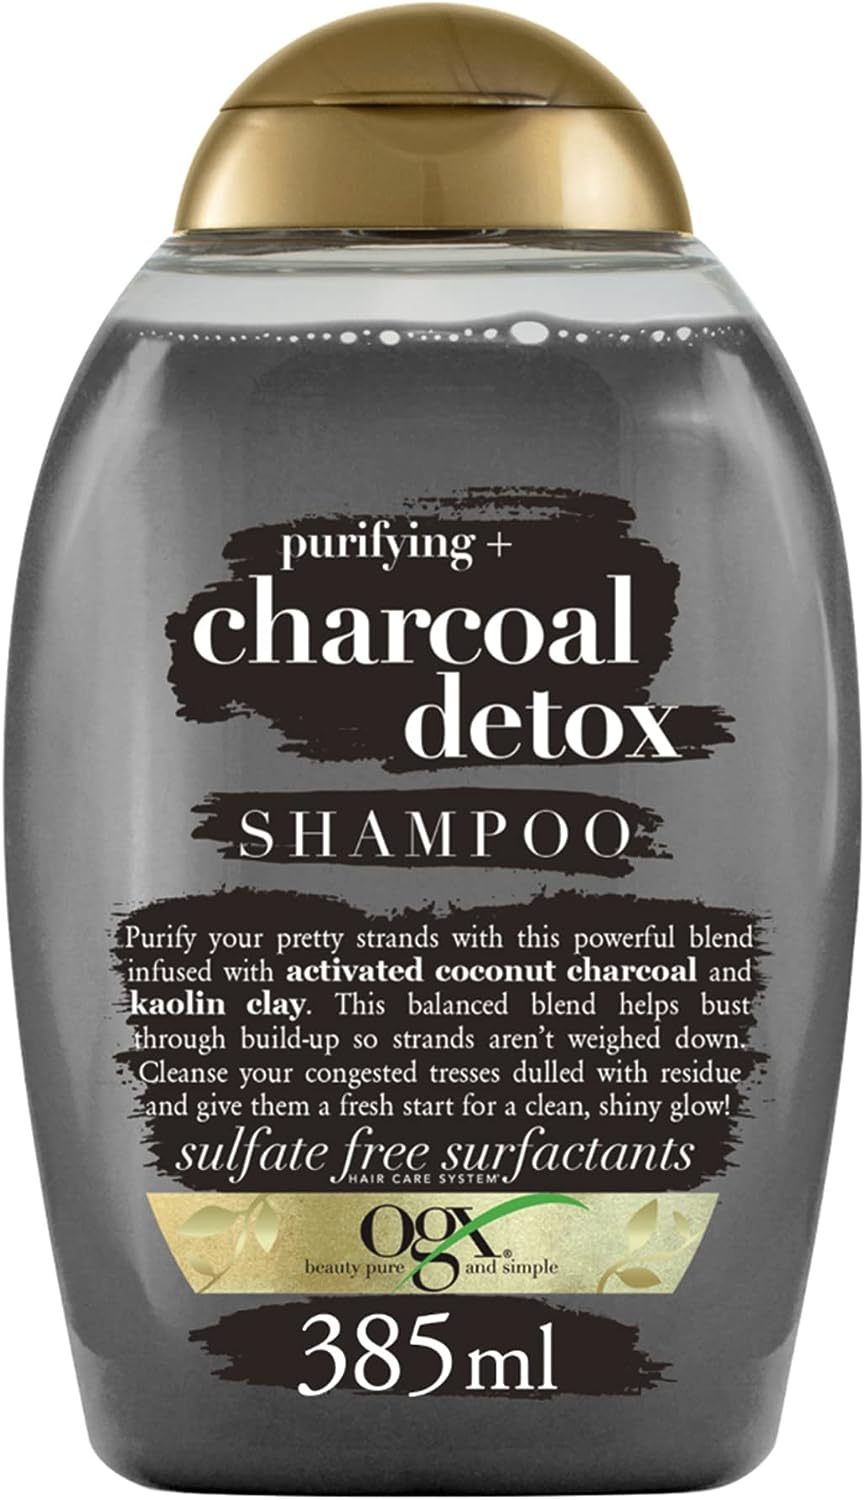 Ogx shampoo Charcoal detex shampoo